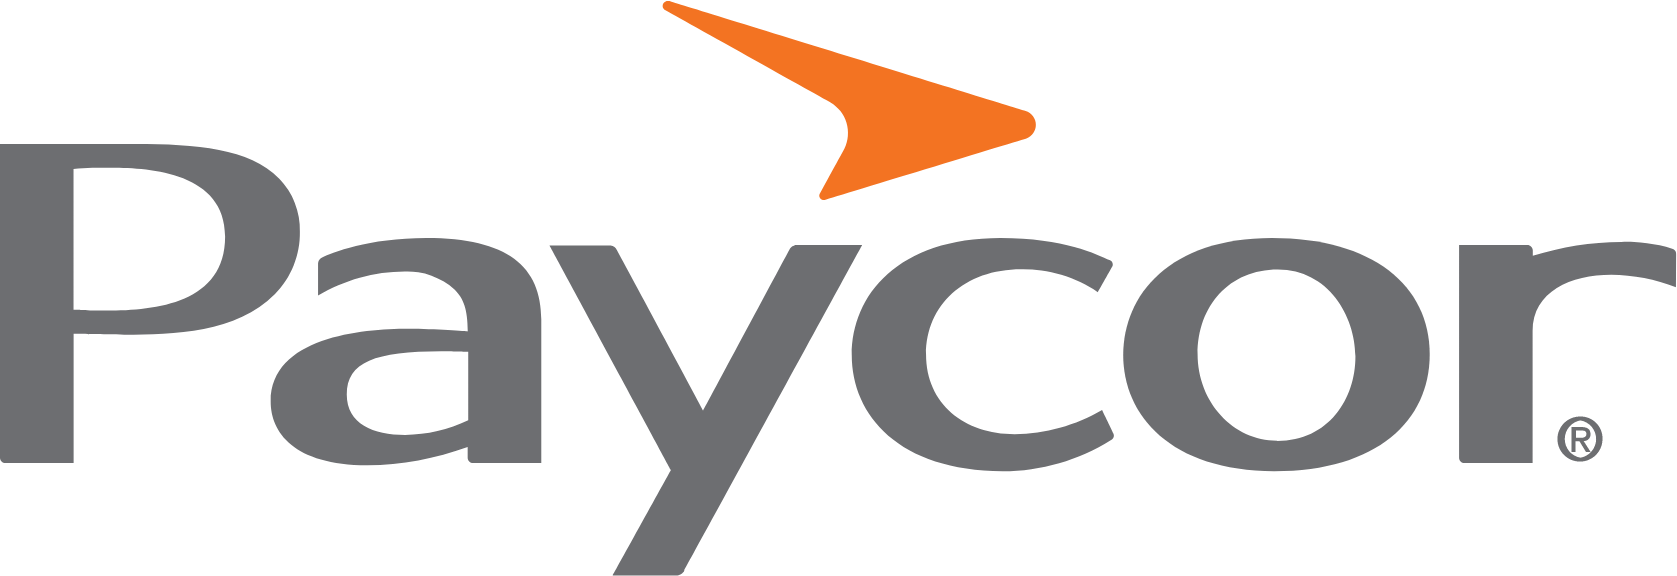 Paycor logo large (transparent PNG)